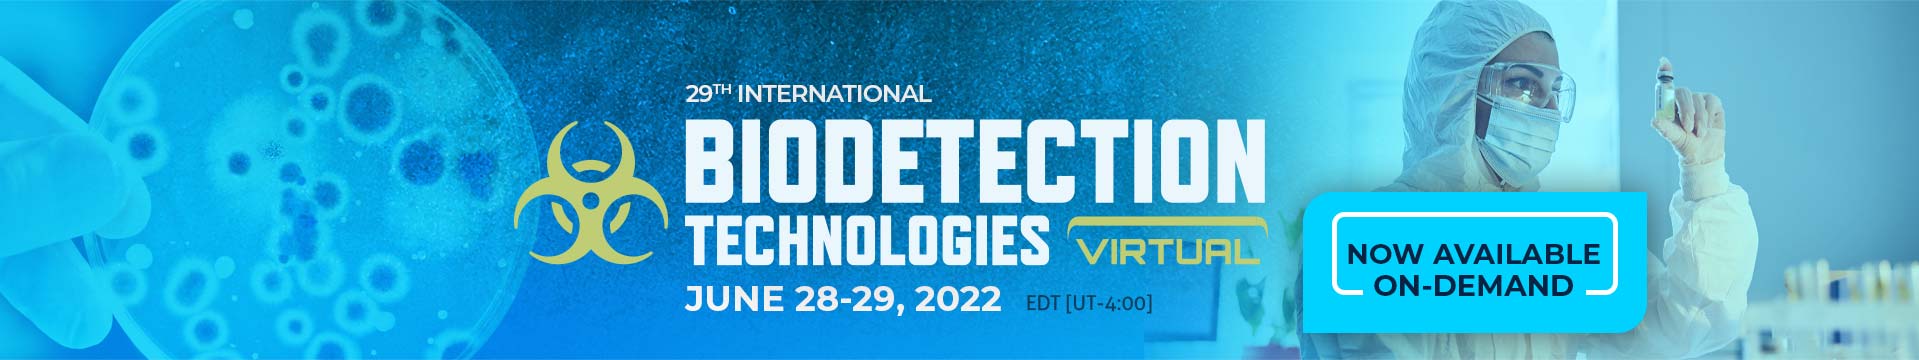 Biodetection Technologies 2022